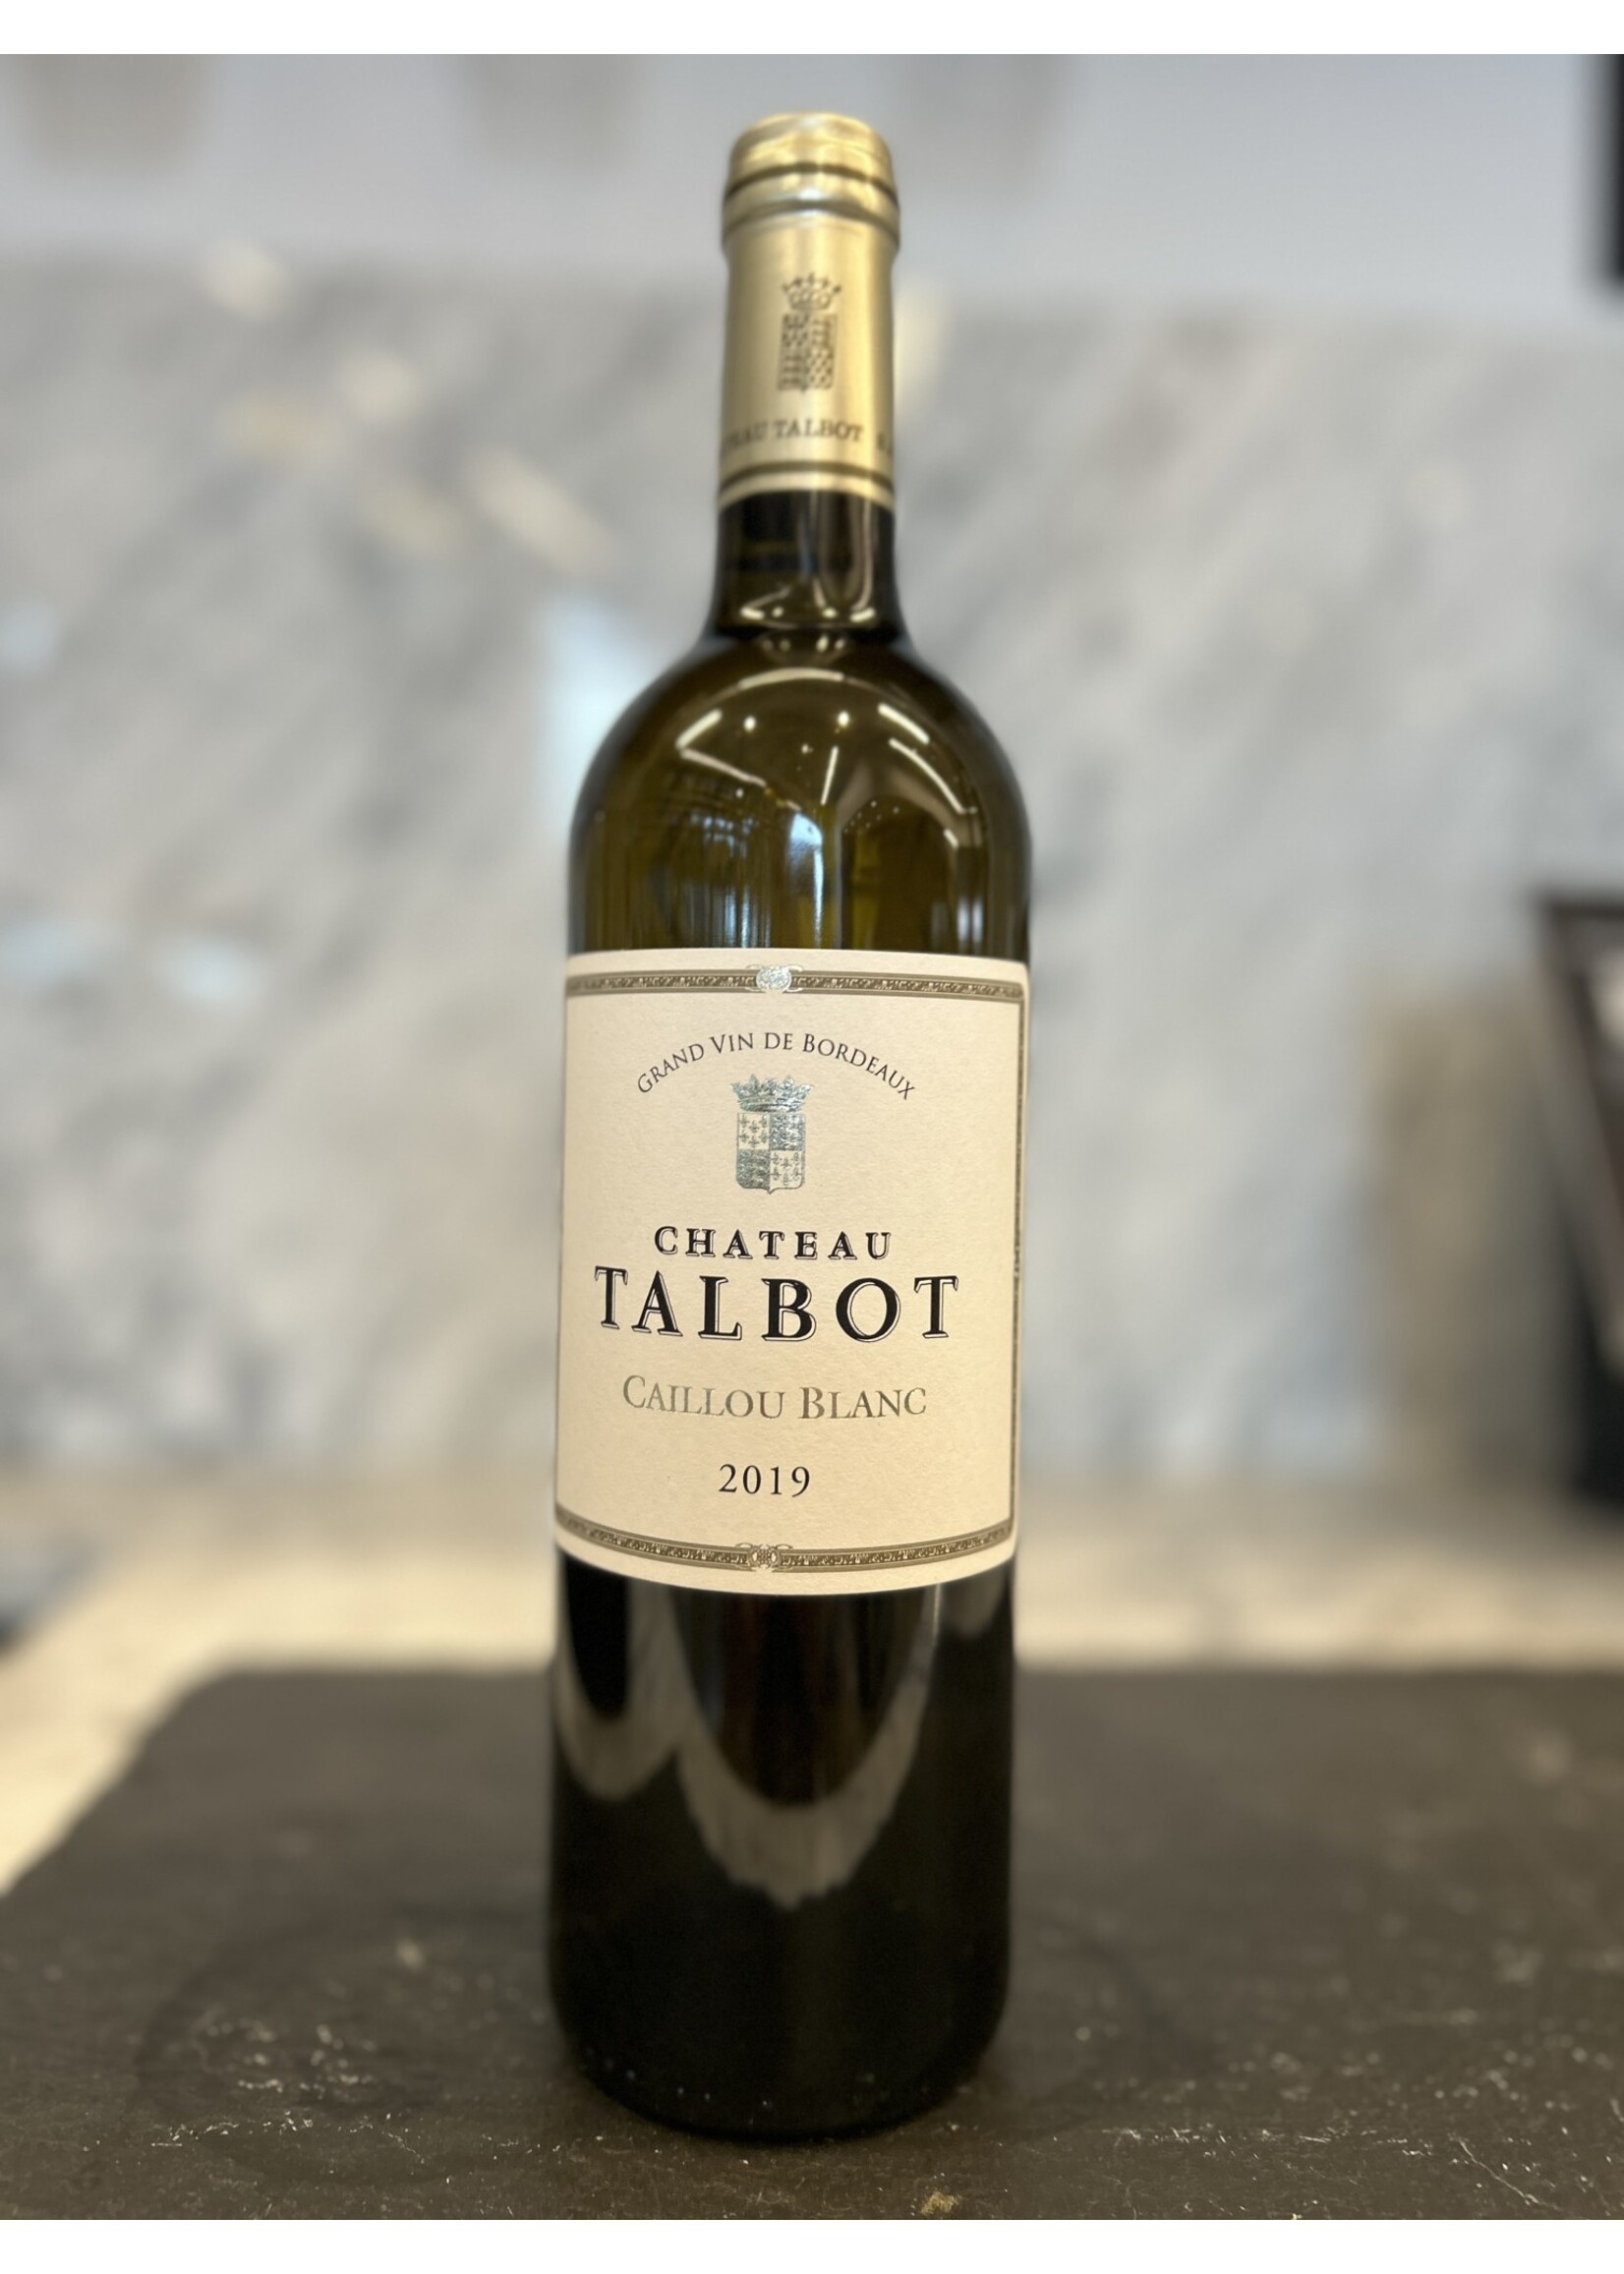 Chateau Talbot Chateau Talbot 2019 Caillou Blanc